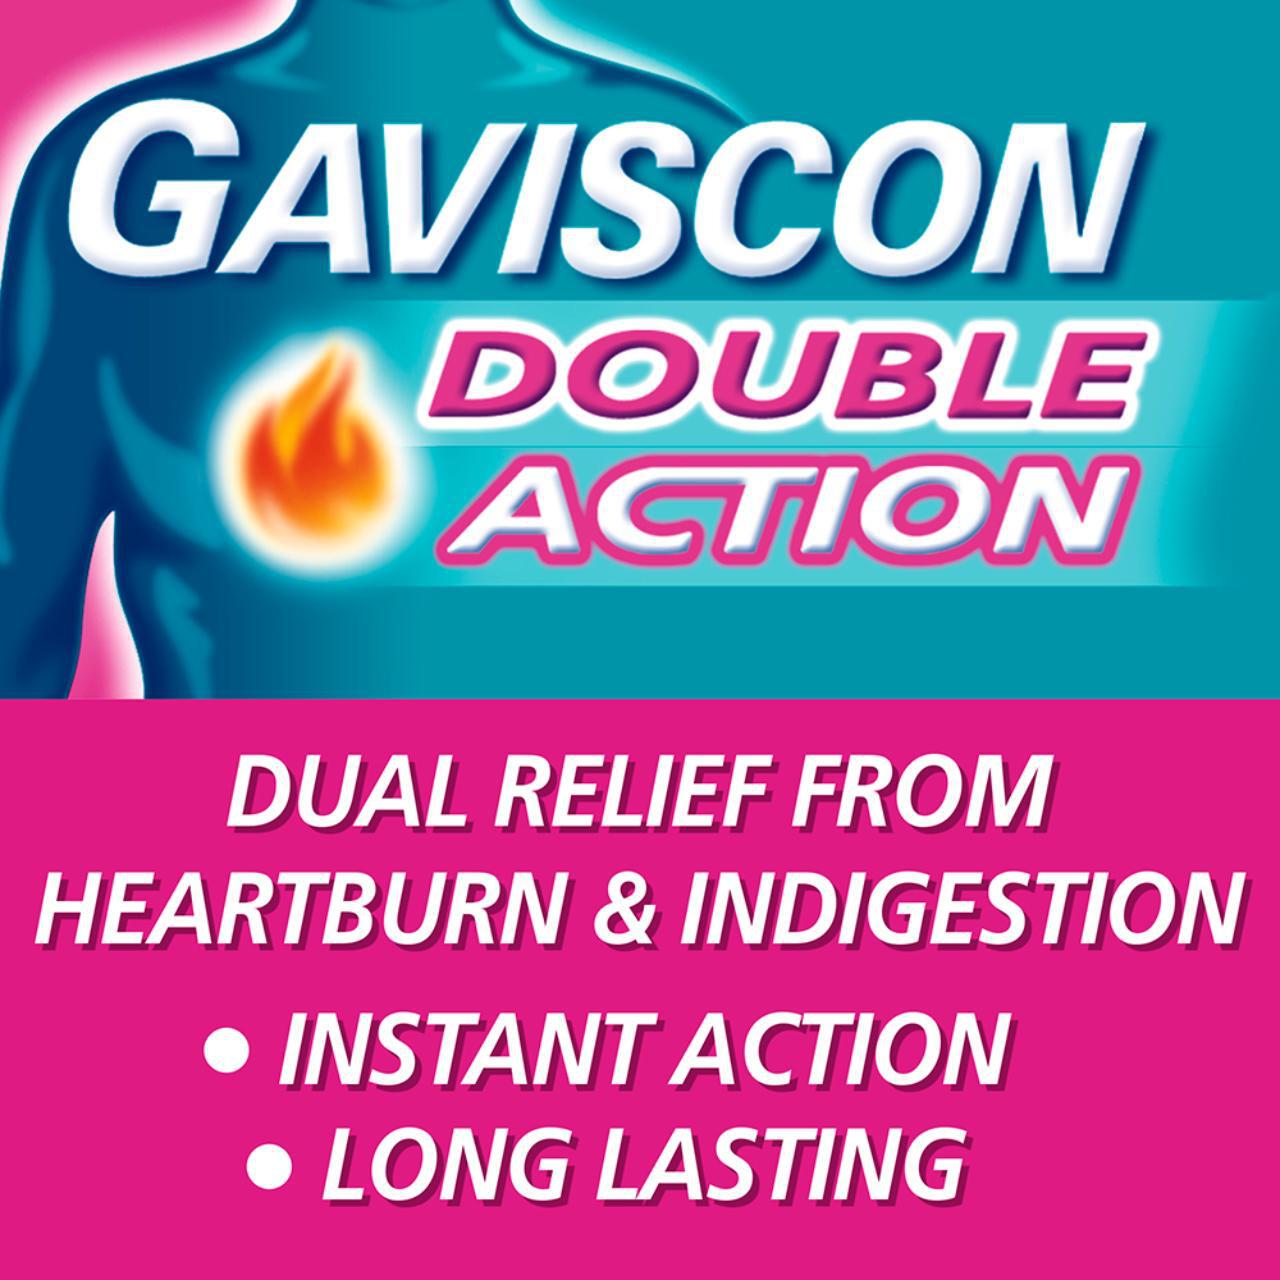 Gaviscon Heartburn & Indigestion Mint Sachets 24 x 10ml